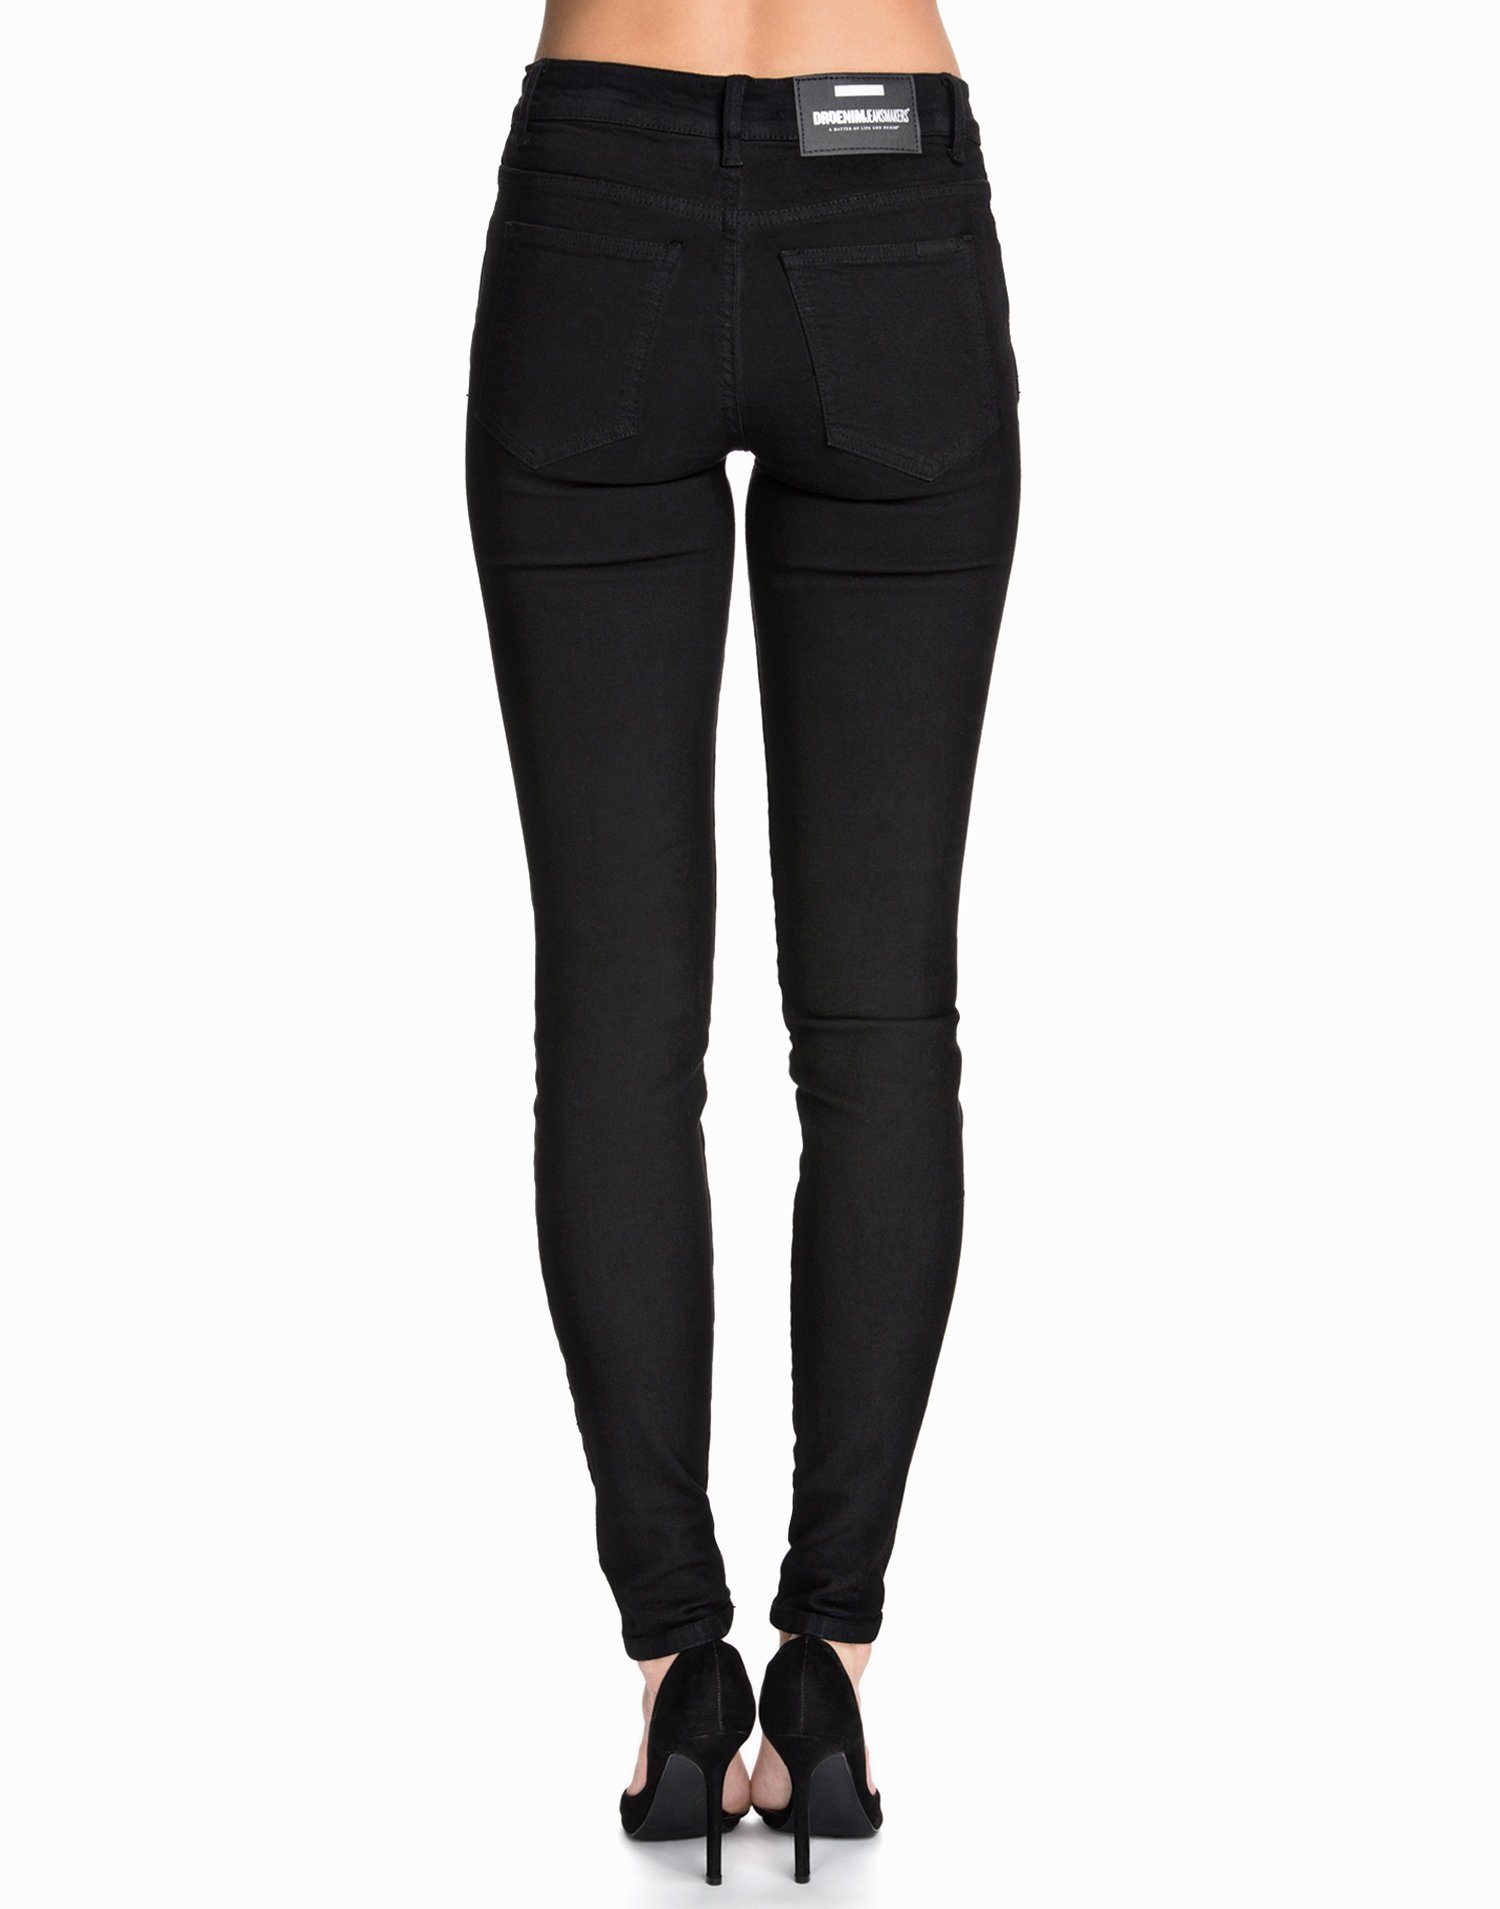 Regina Jeans Nelly Exclusive - Dr Denim - Black - Jeans - Clothing ...